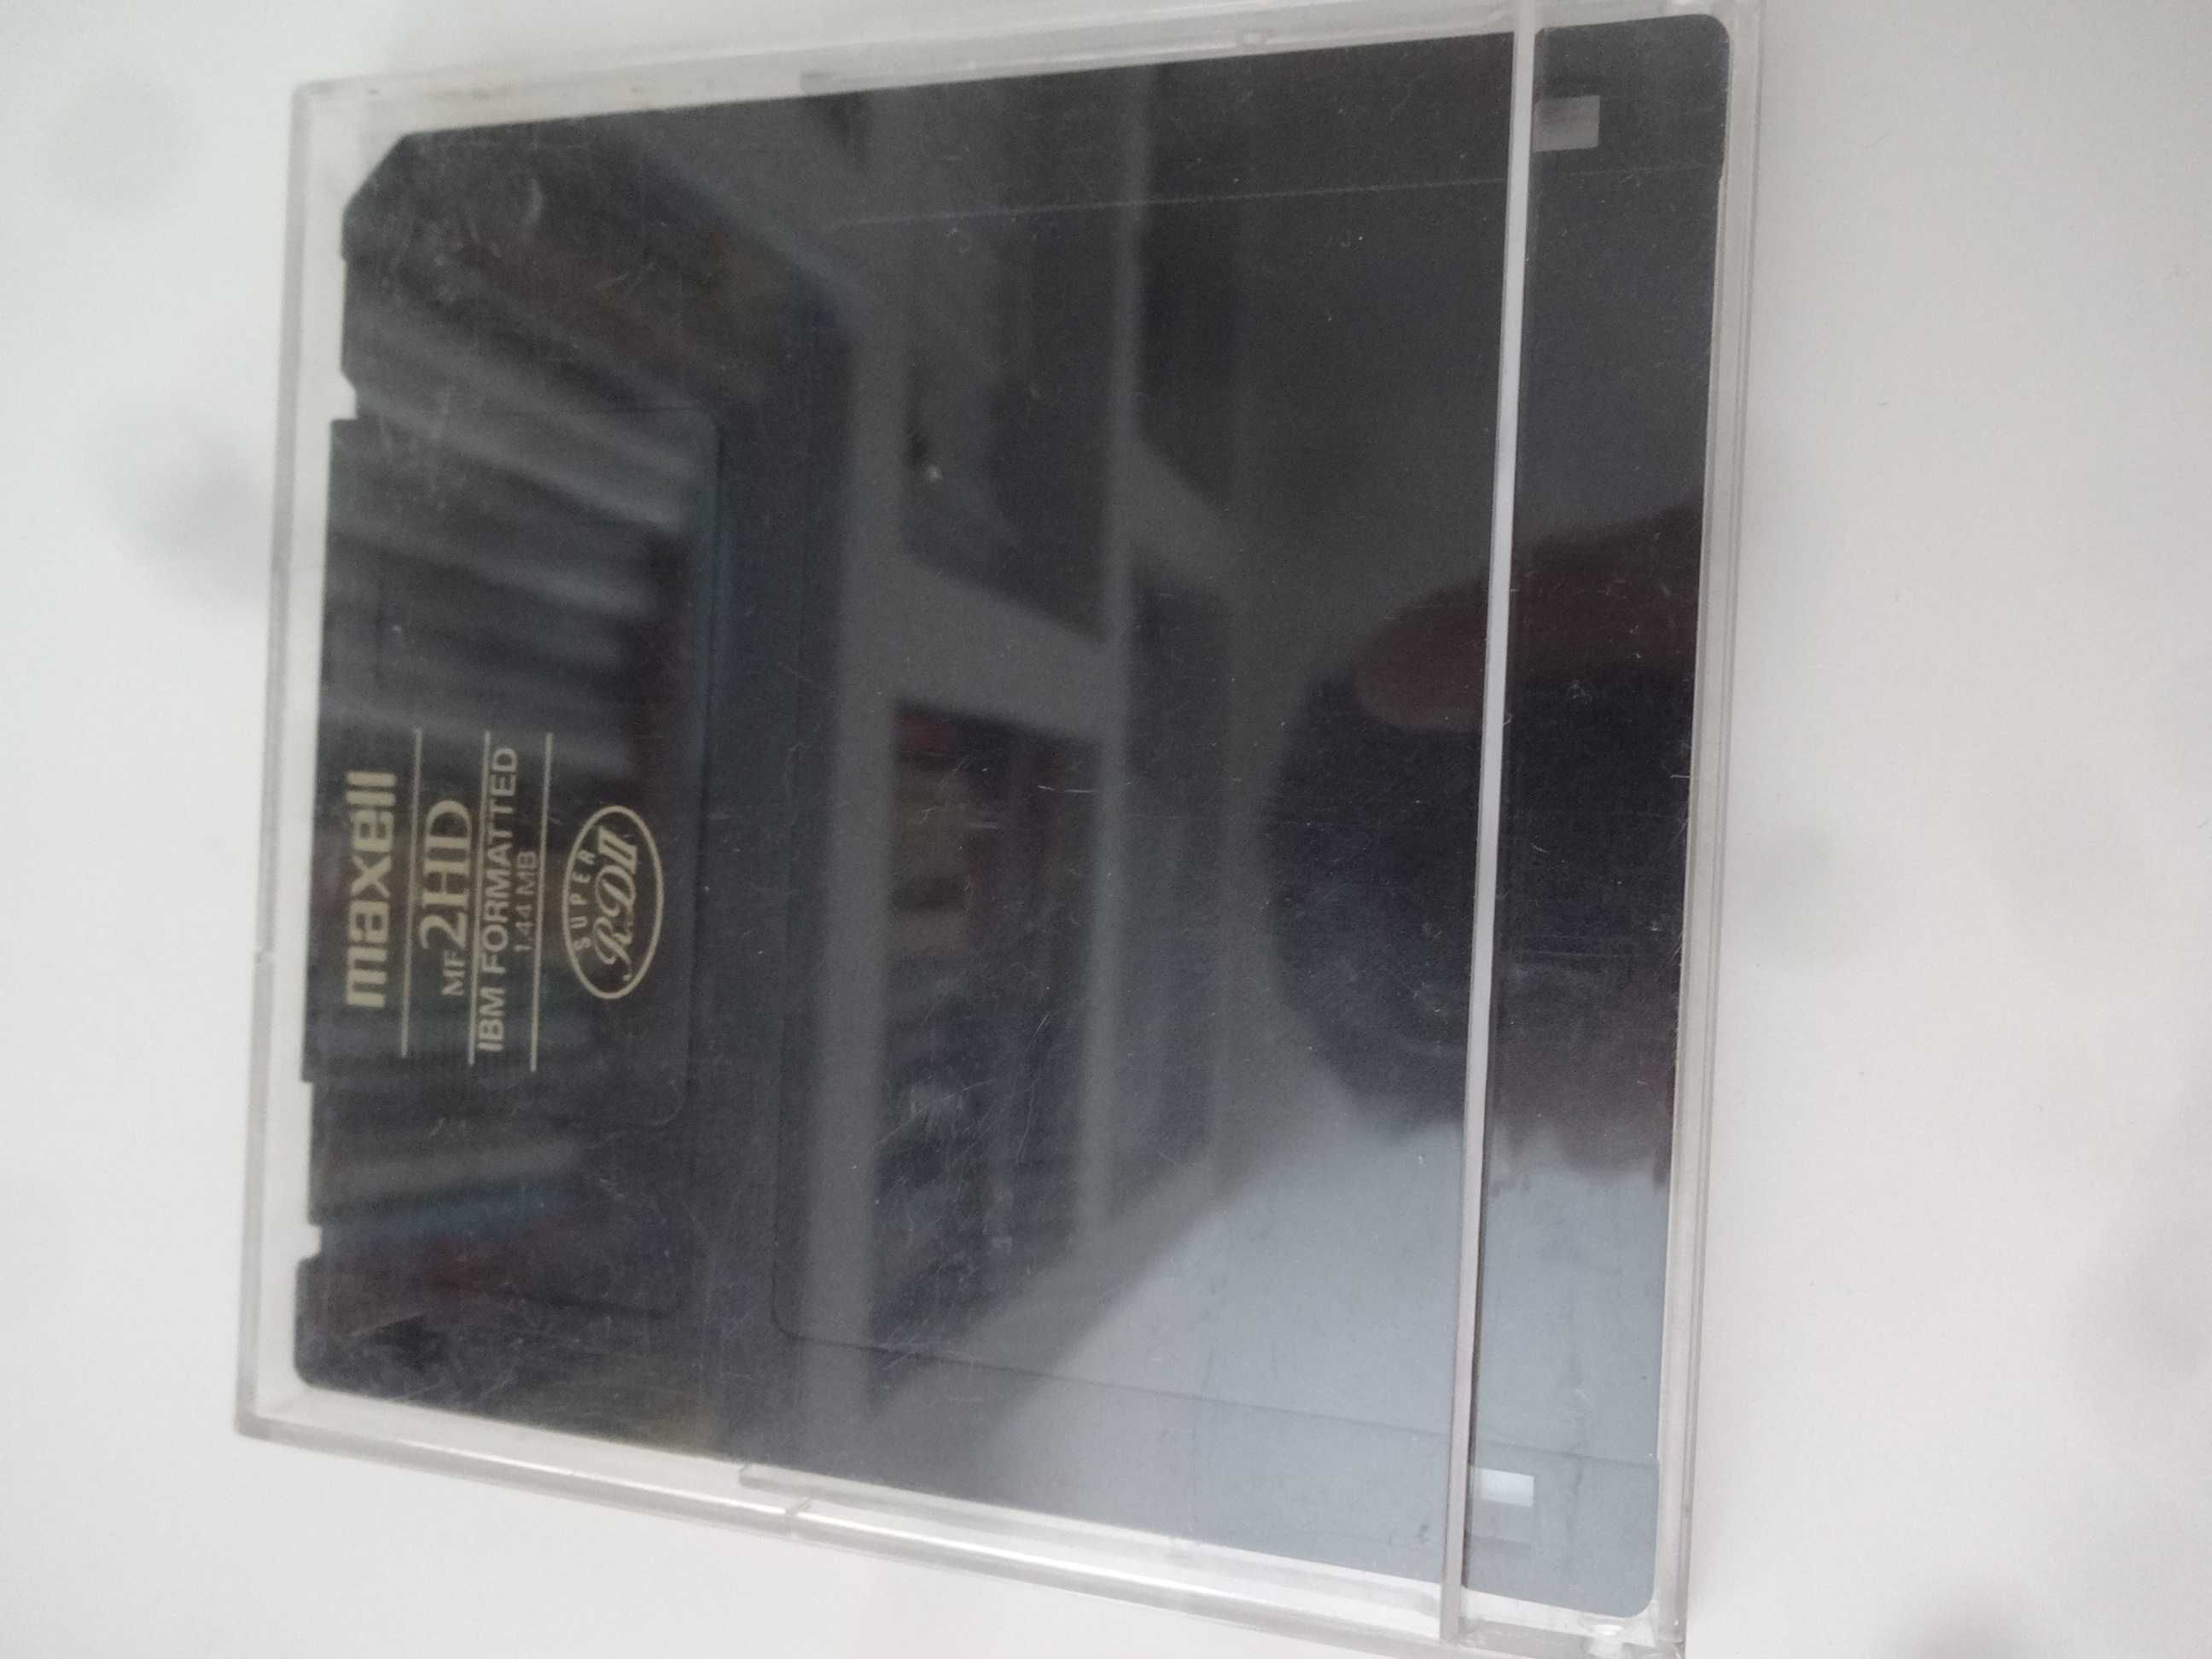 1 Floppy Disk Maxwell retro vintage made in England sprawne